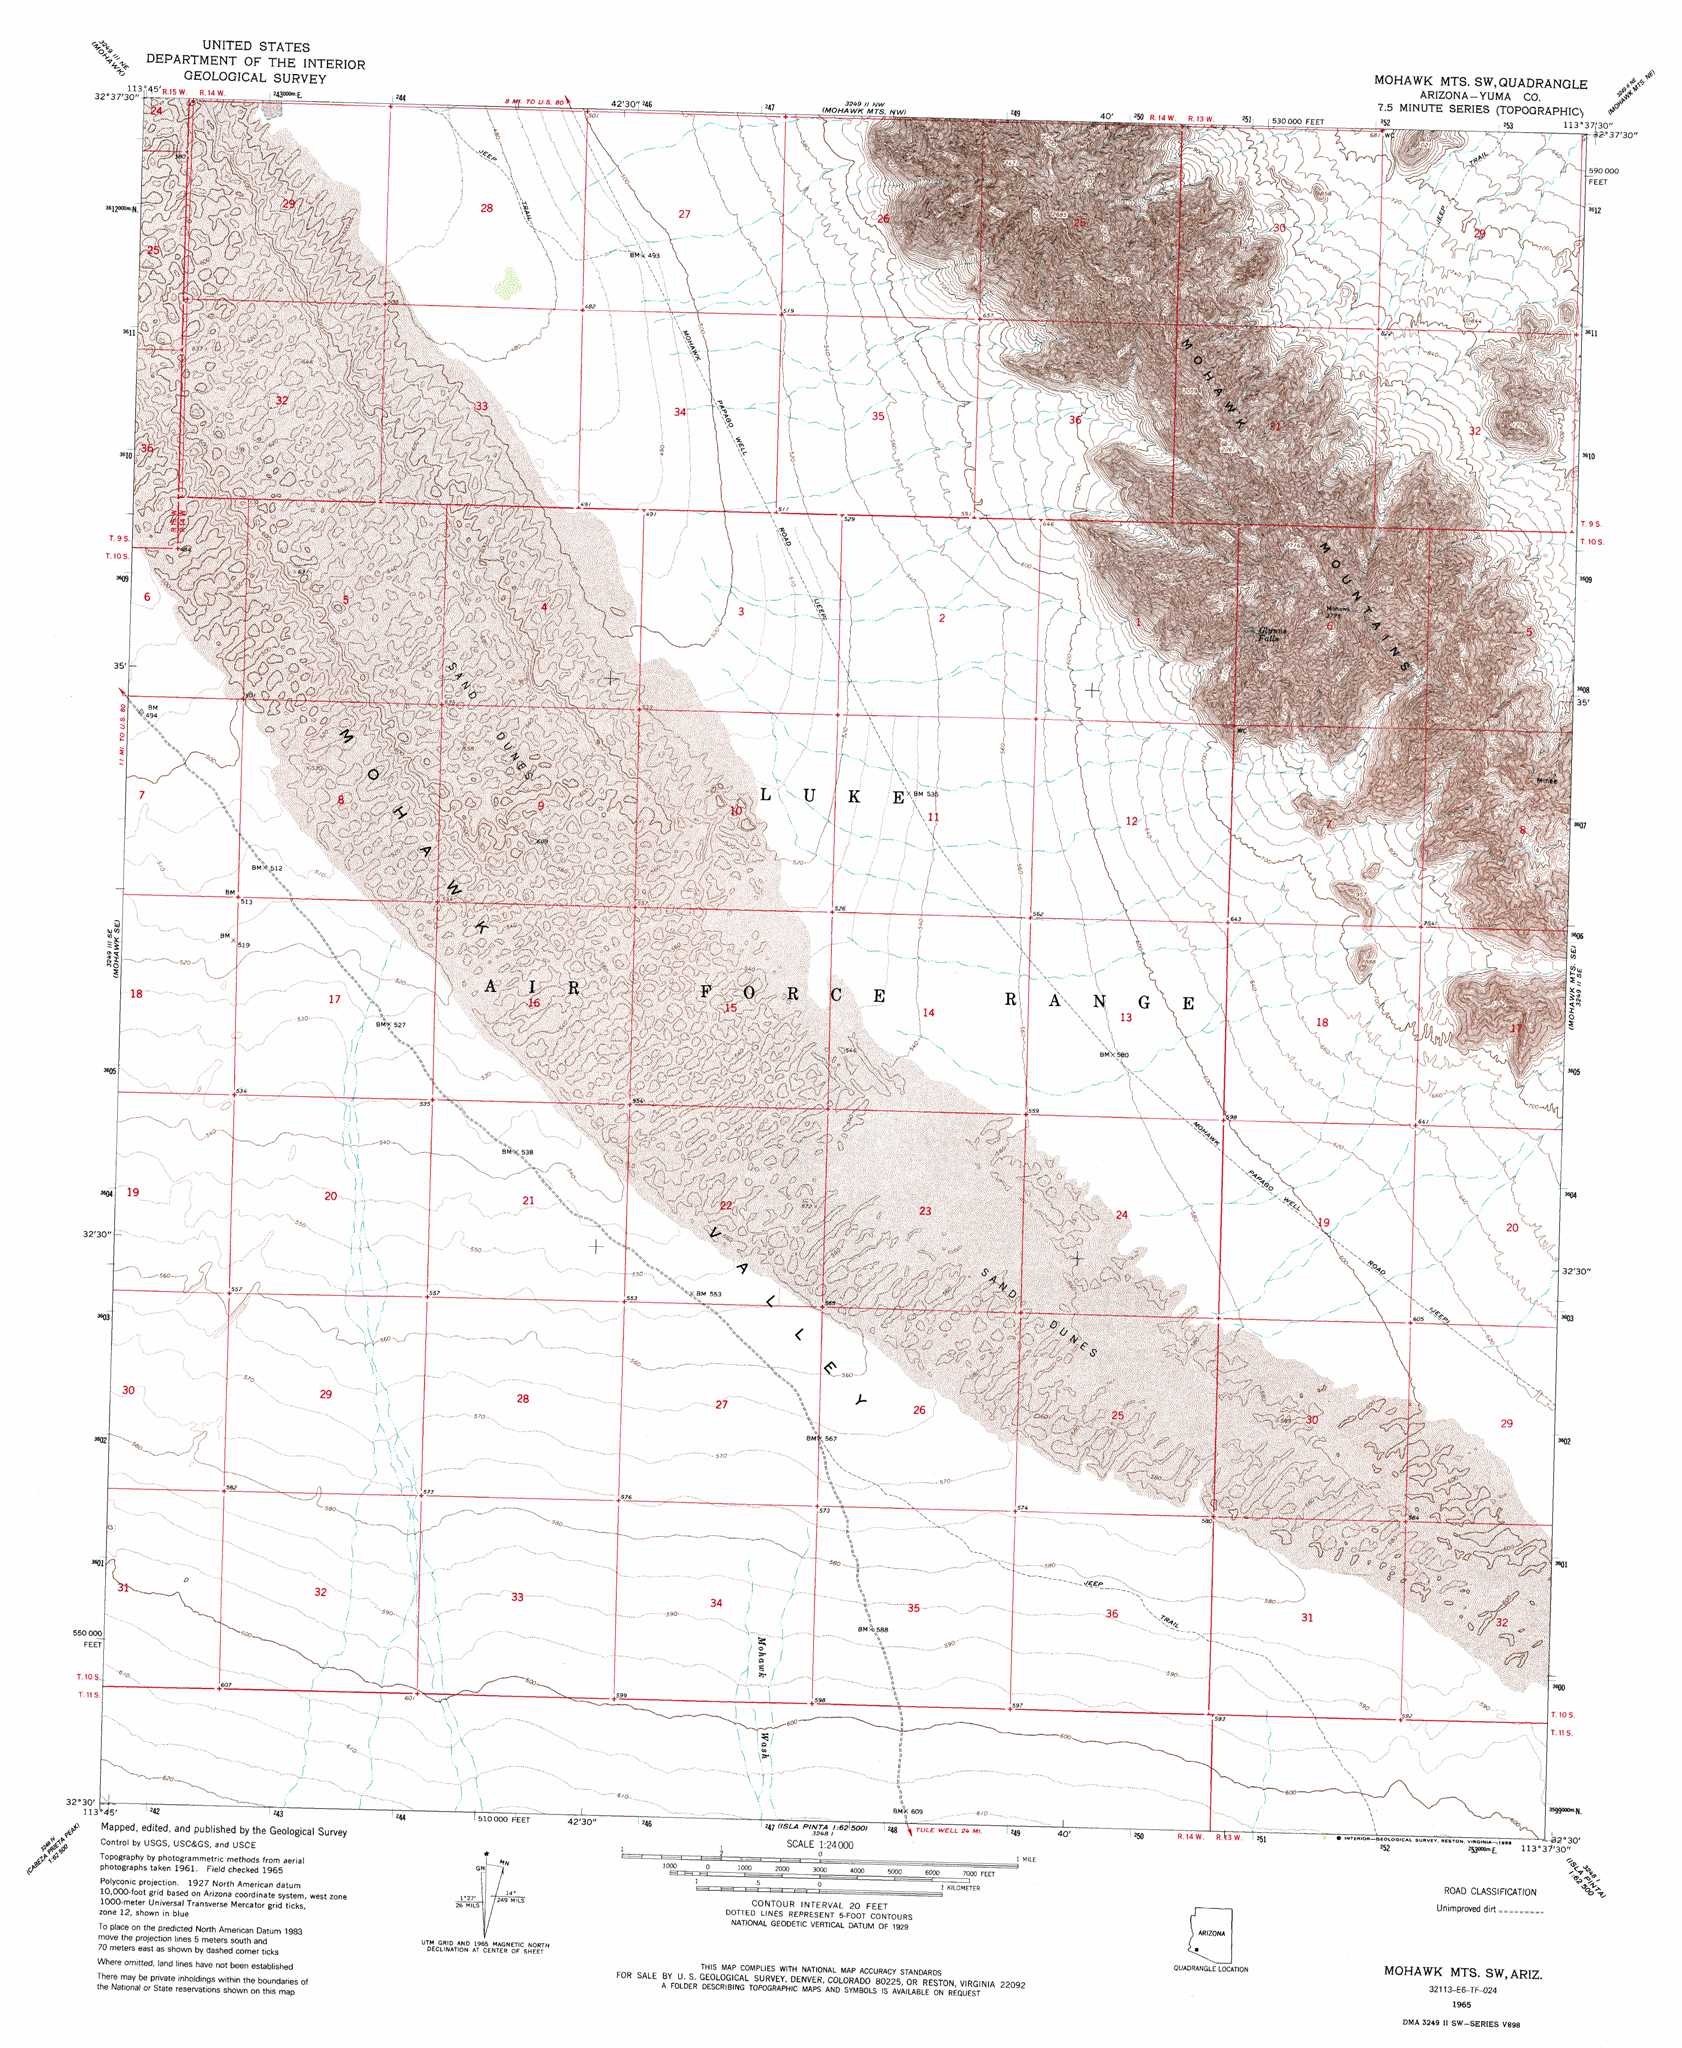 Mohawk Mountains Sw topographic map 1:24,000 scale, Arizona